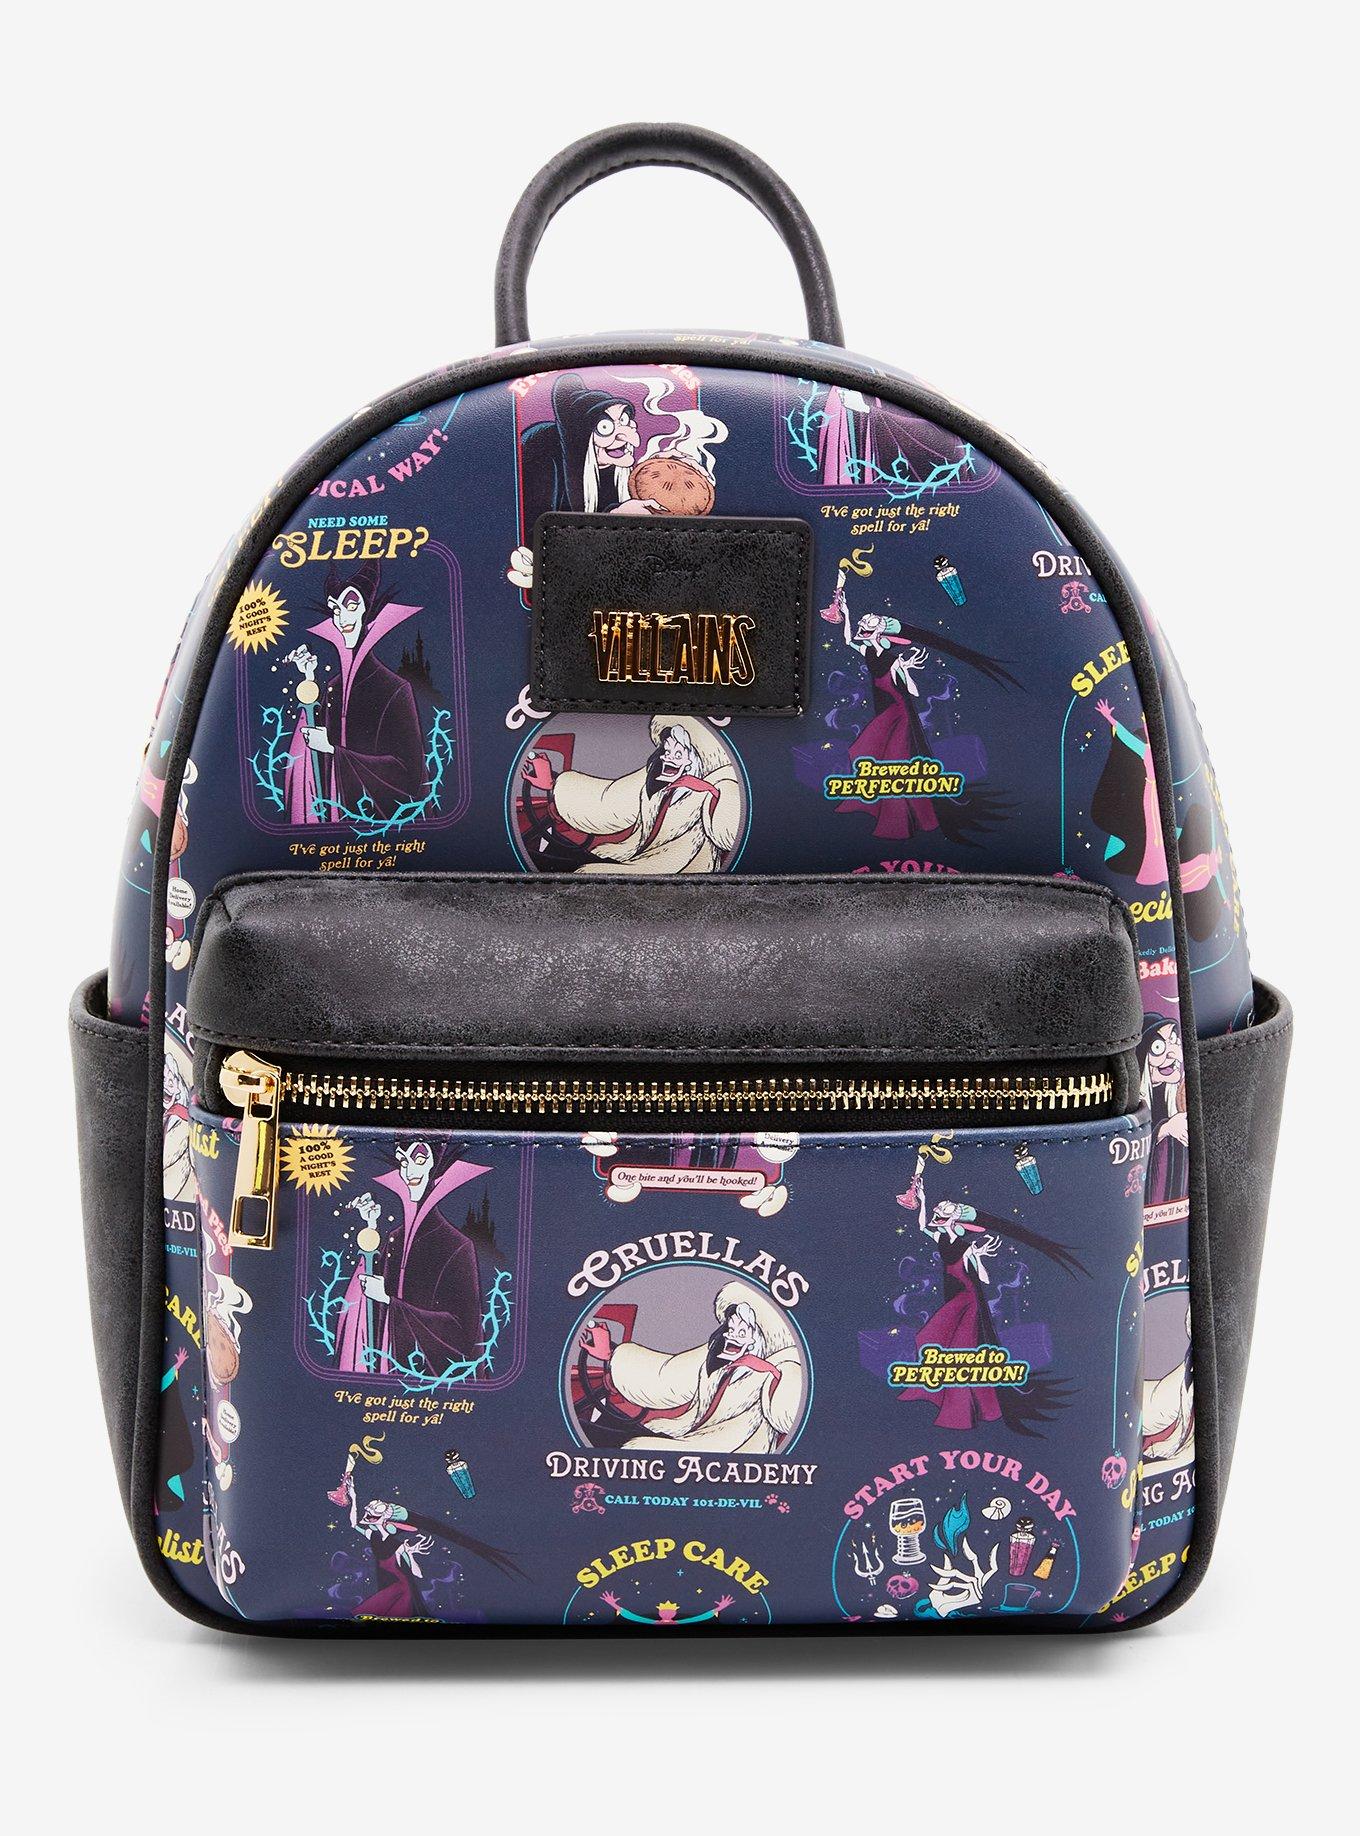 Disney villains, parks, Alice in wonderland and mouse inspired bag